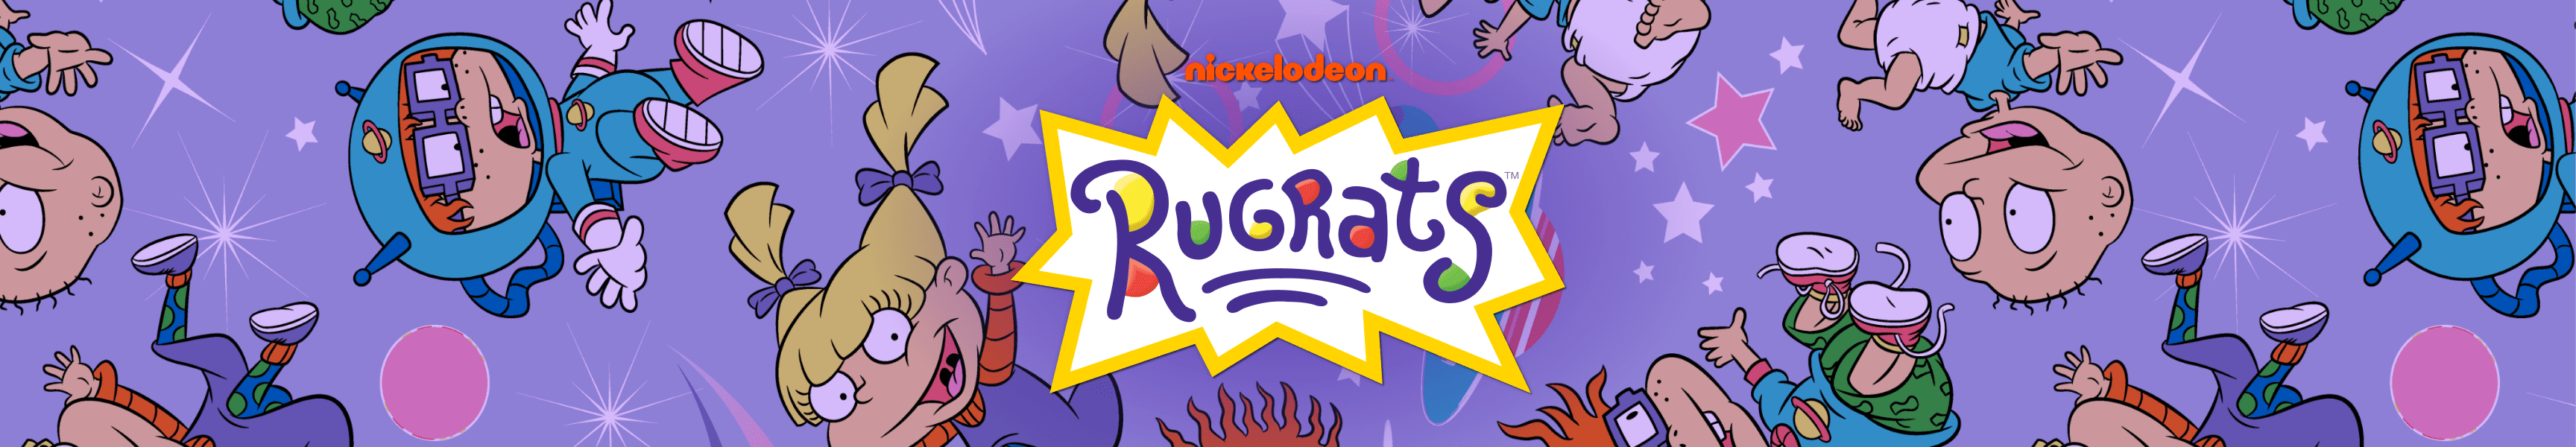 Rugrats Halloween